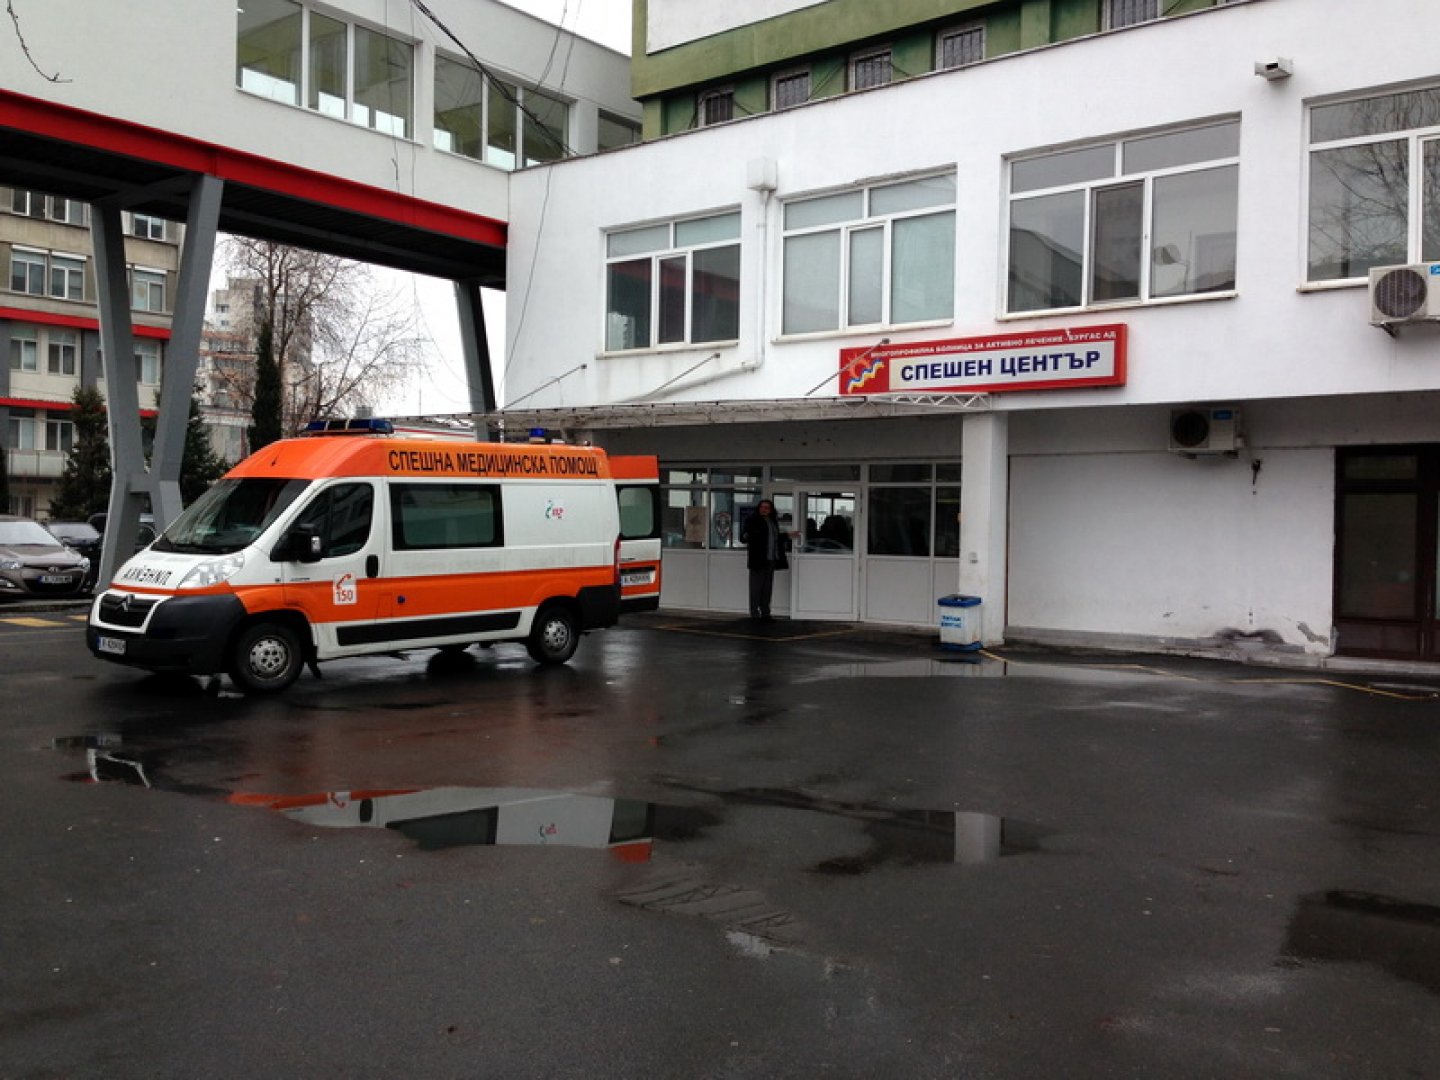 Спешното в Бургас вече пресява пациентите с коронавирус - E-Burgas.com